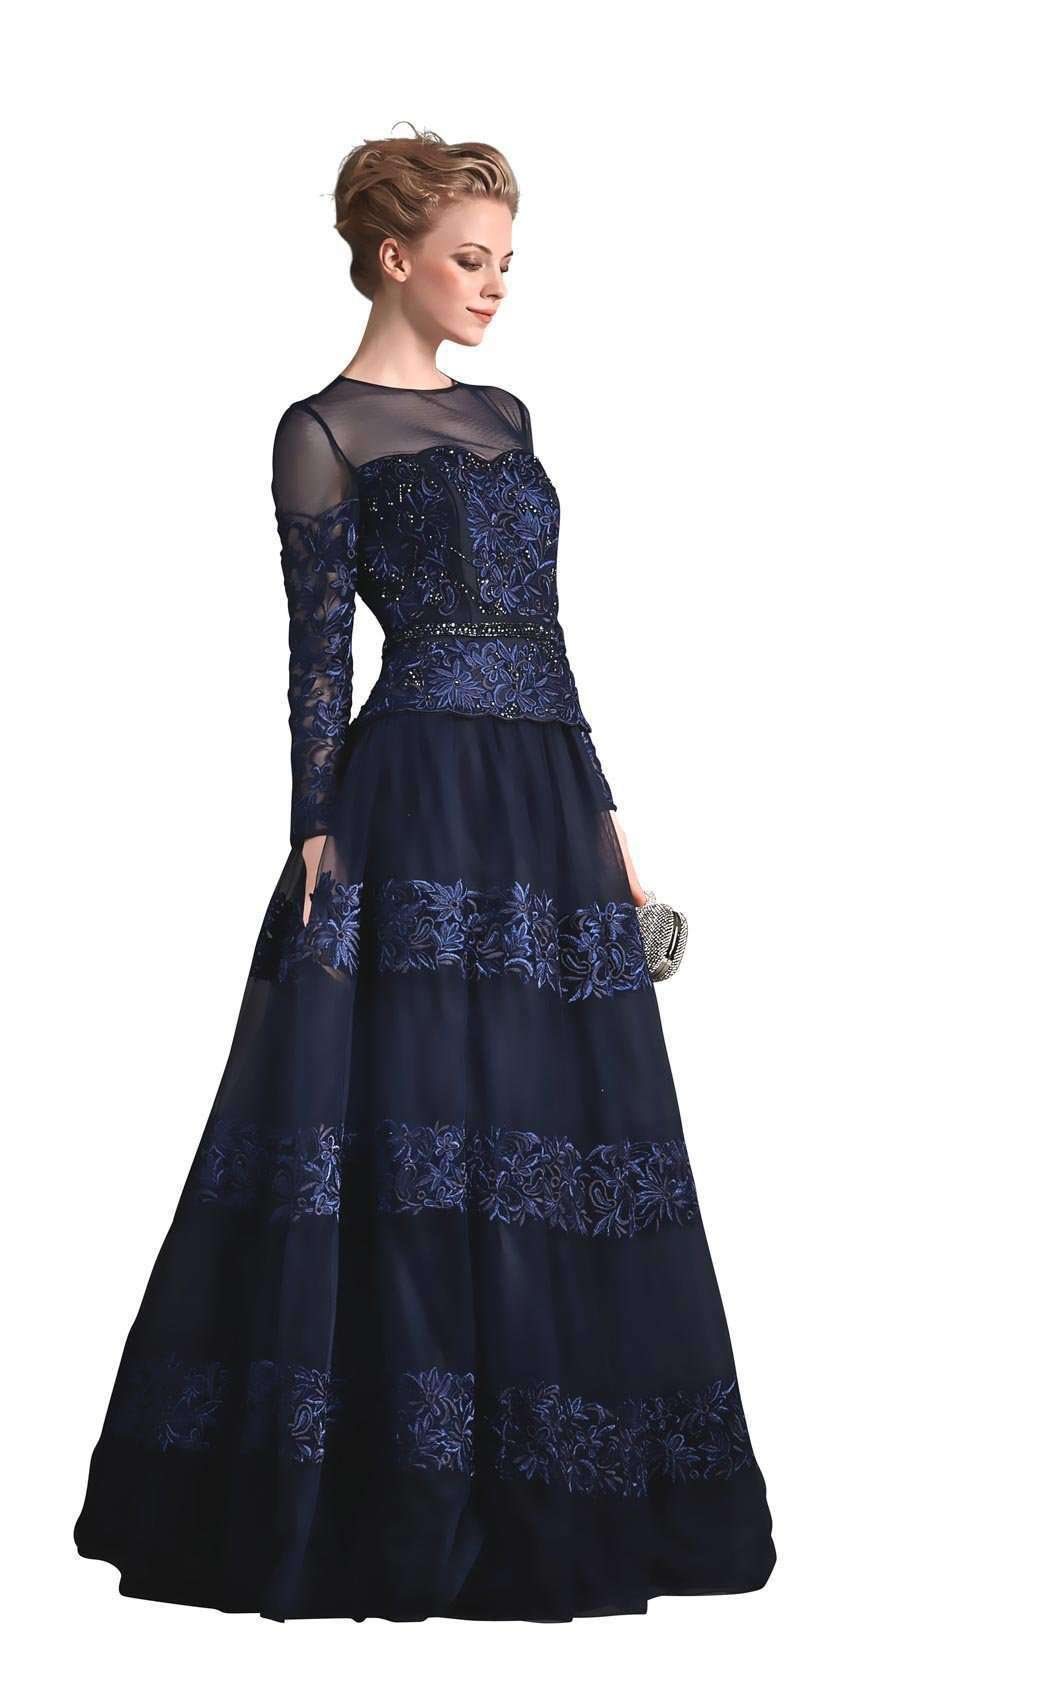 Park 108 M129 Dress | Buy Designer Gowns & Evening Dresses – NewYorkDress